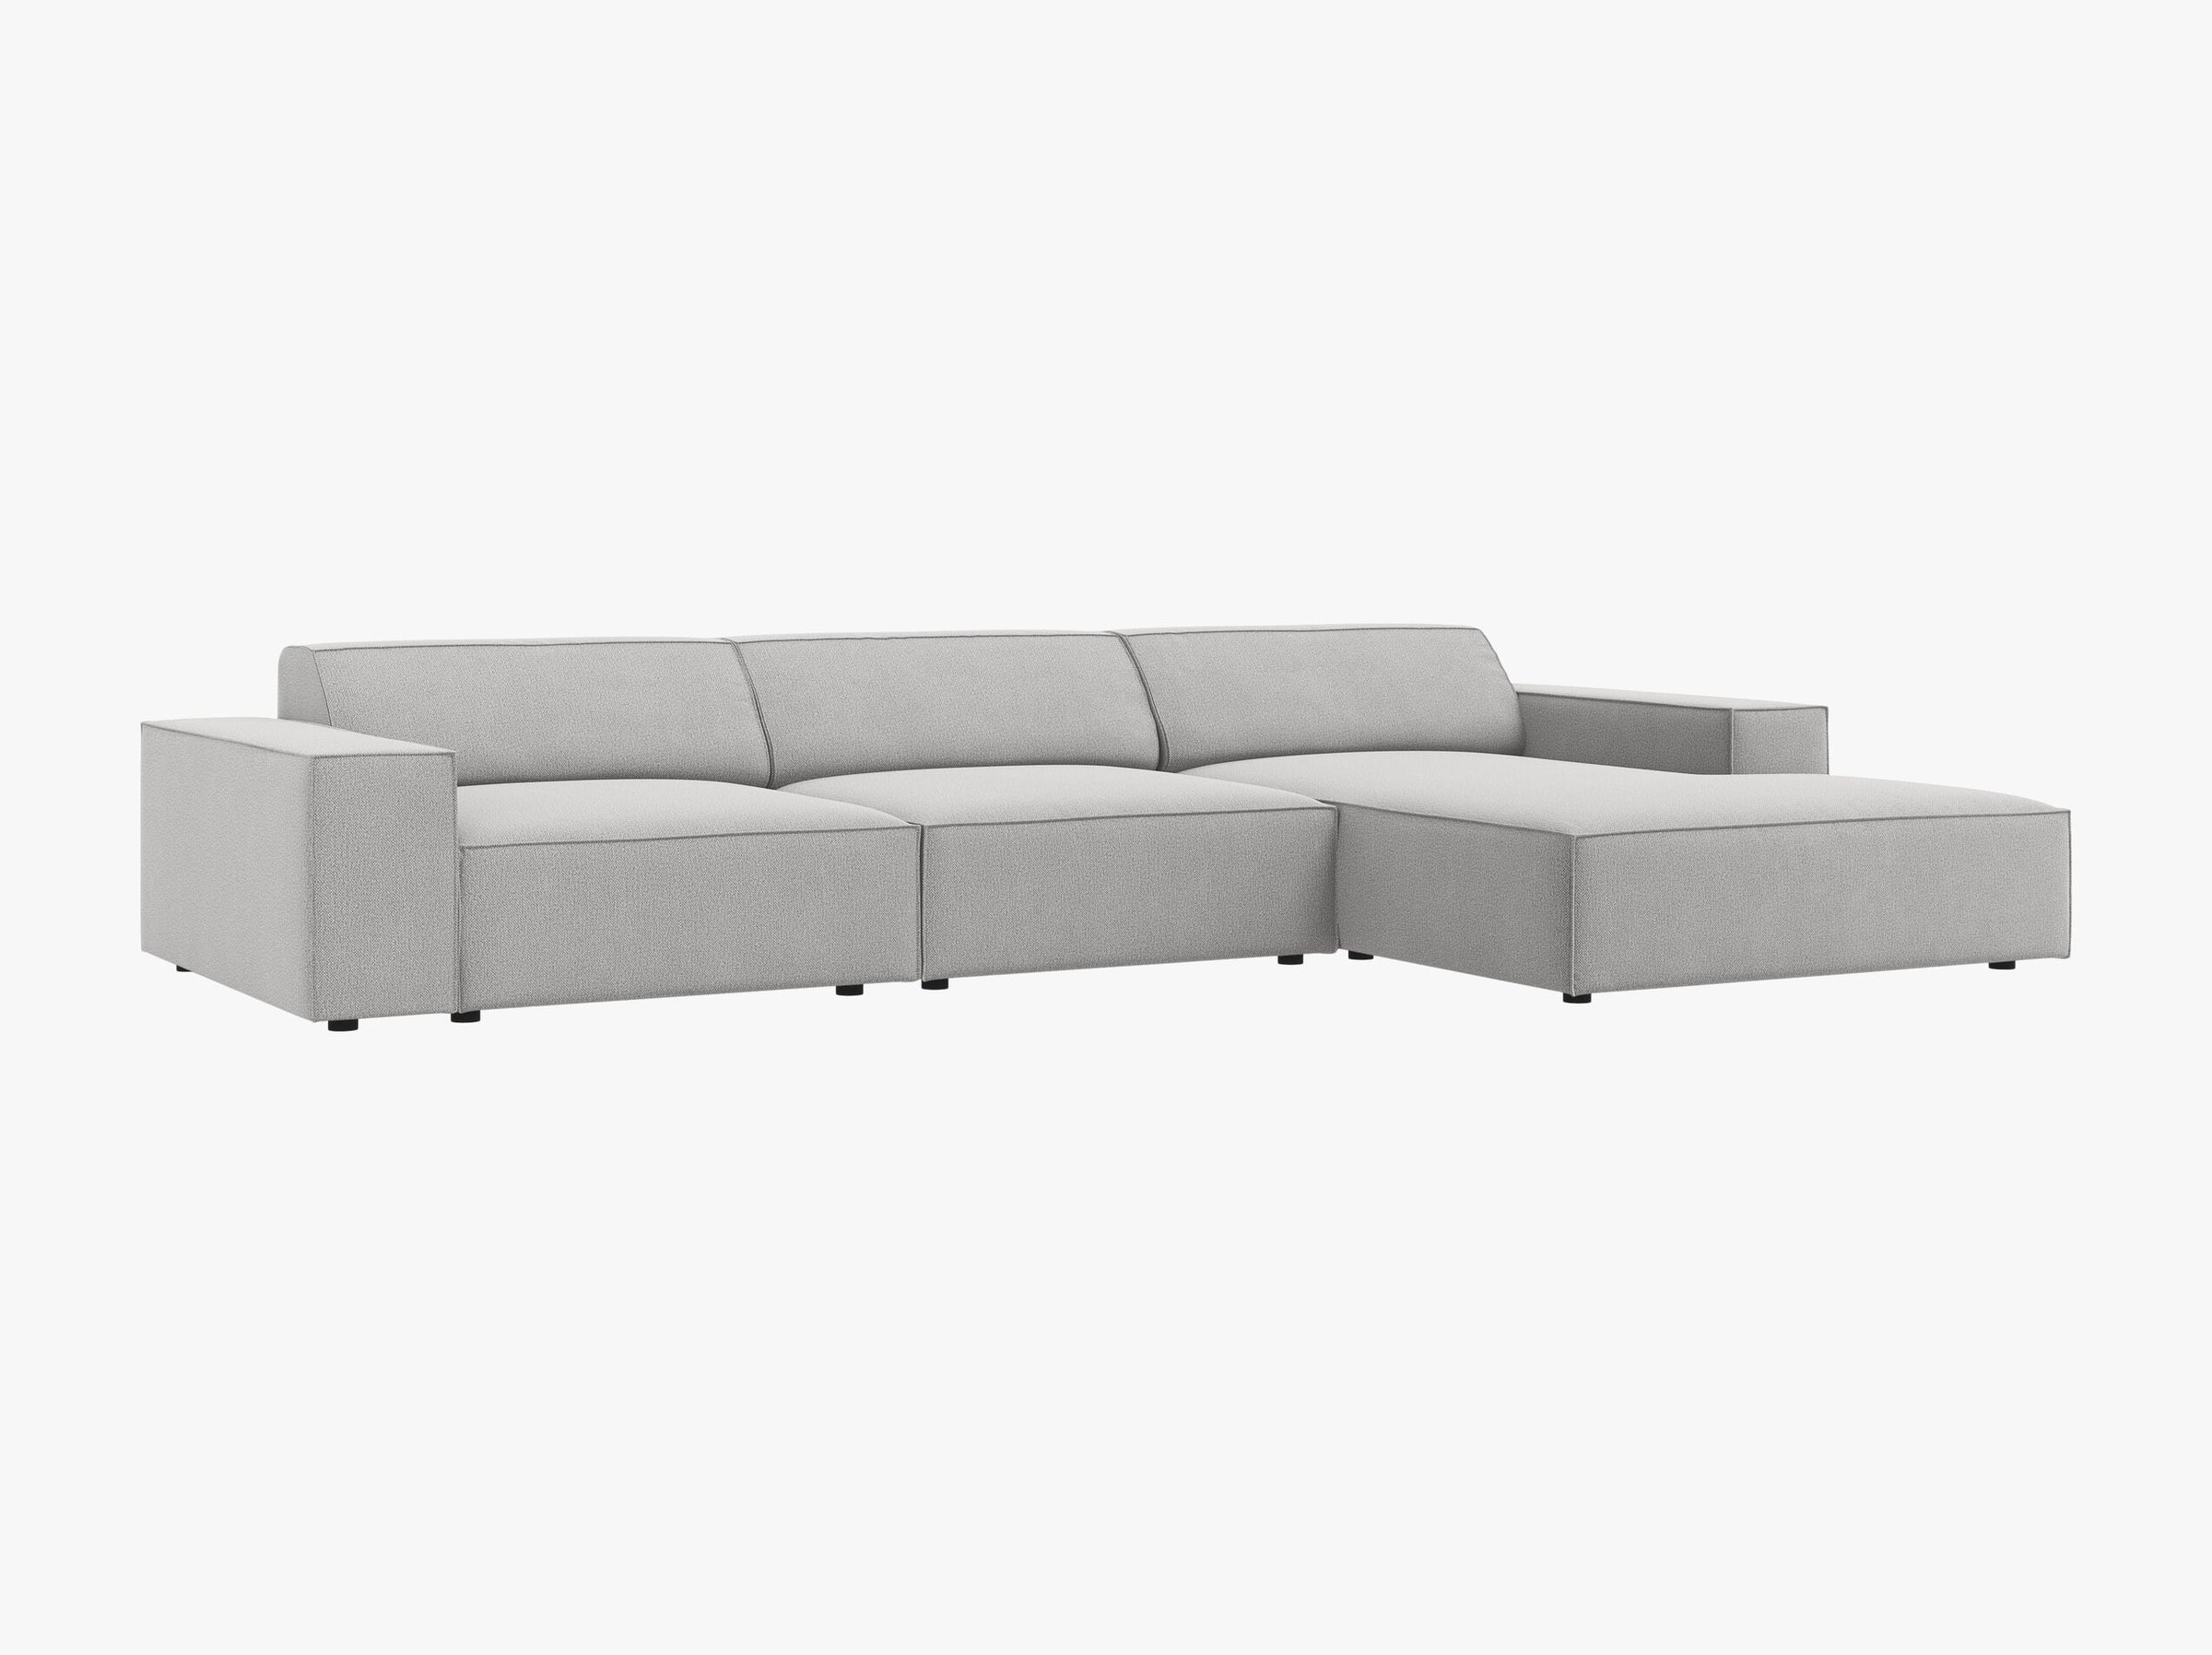 Jodie sofas structured fabric light grey